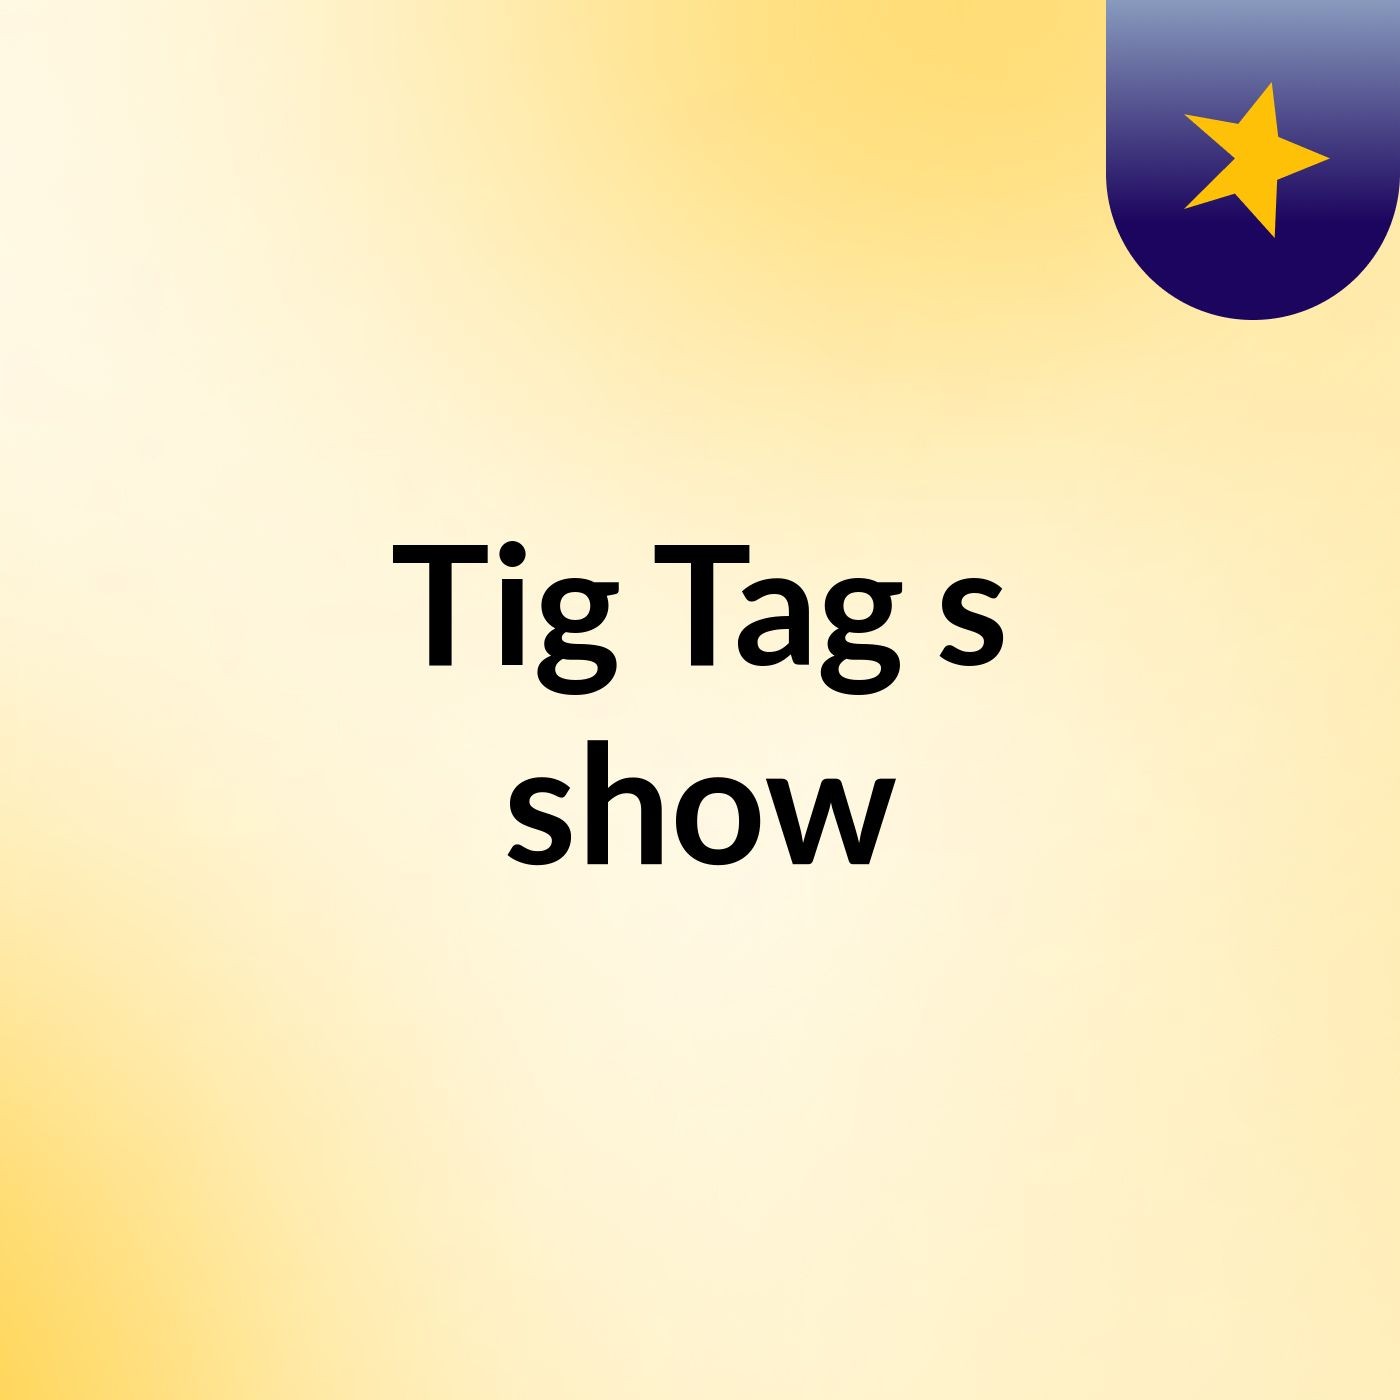 Tig Tag's show